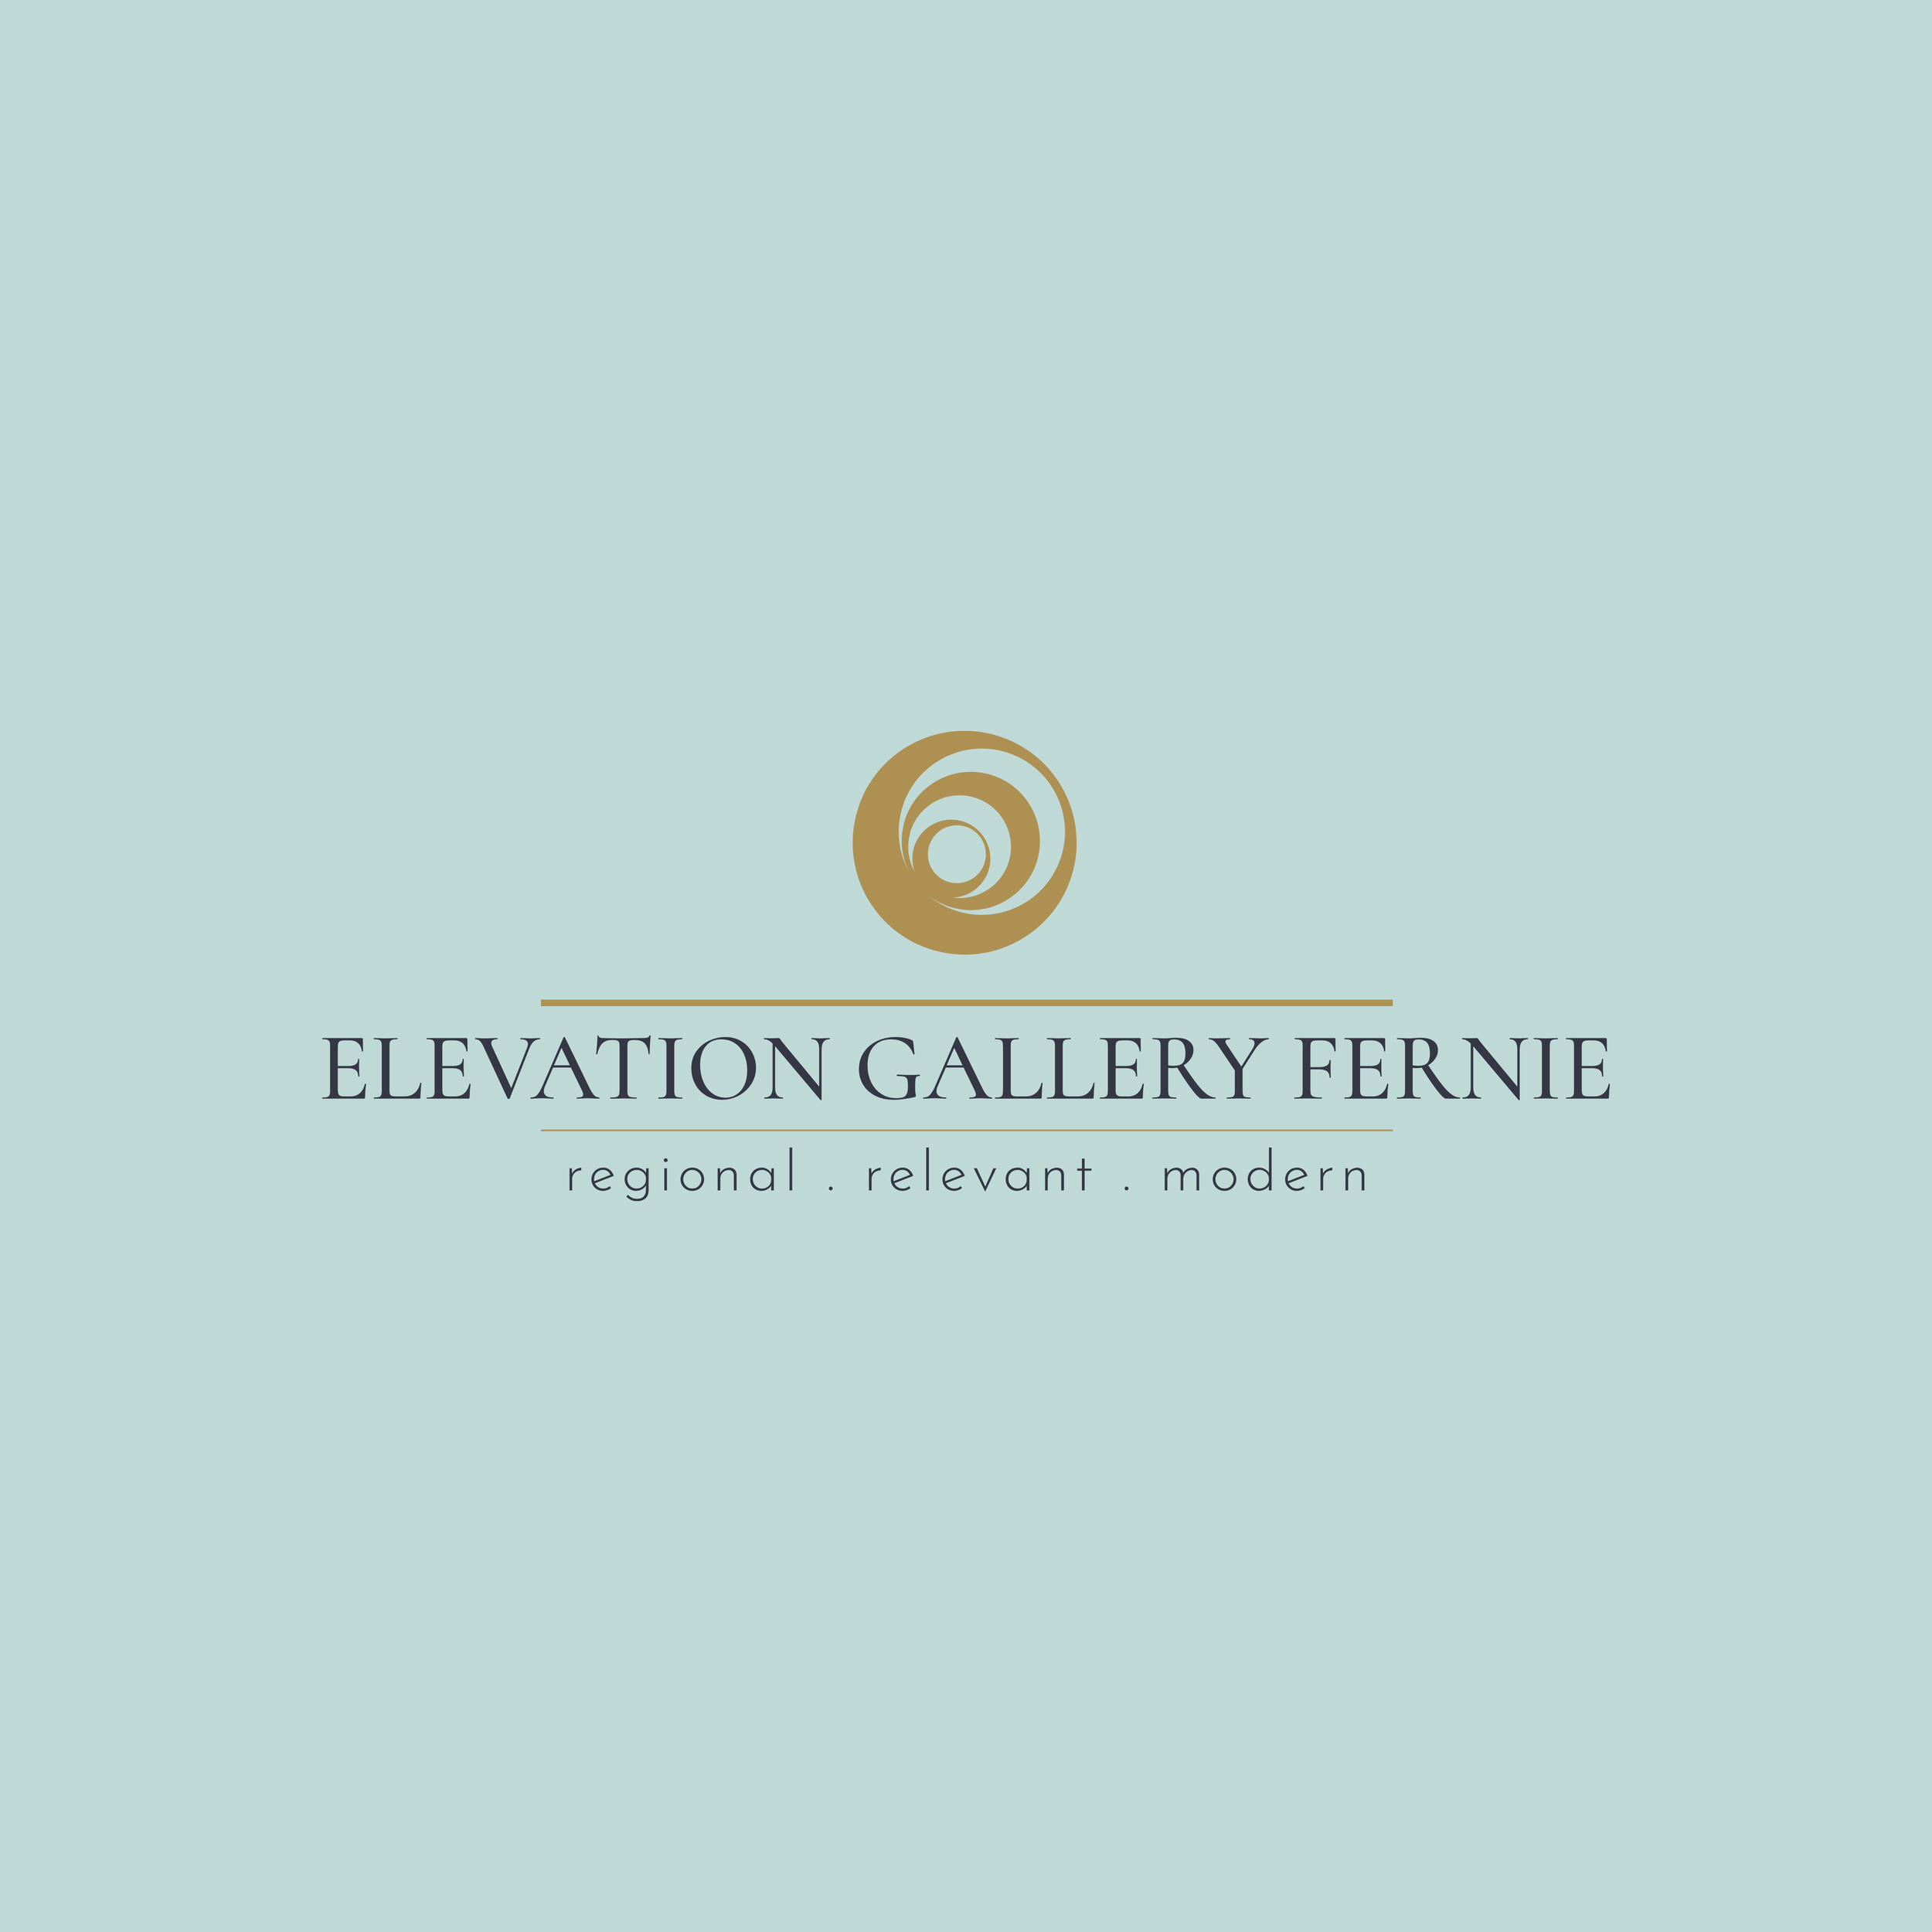 Elevation Gallery Fernie